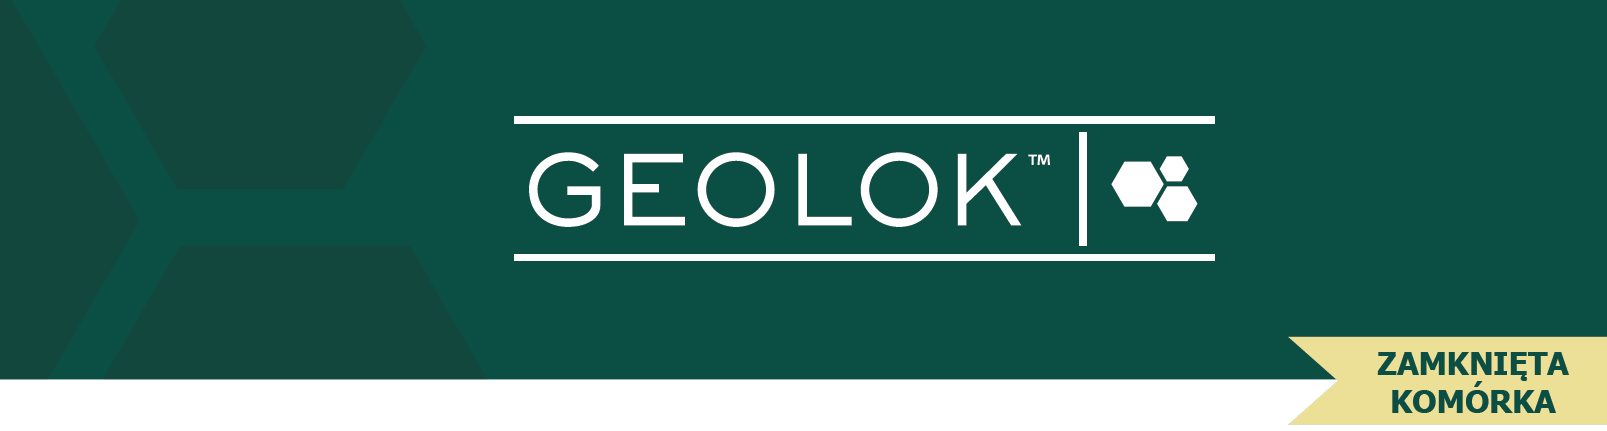 geolok